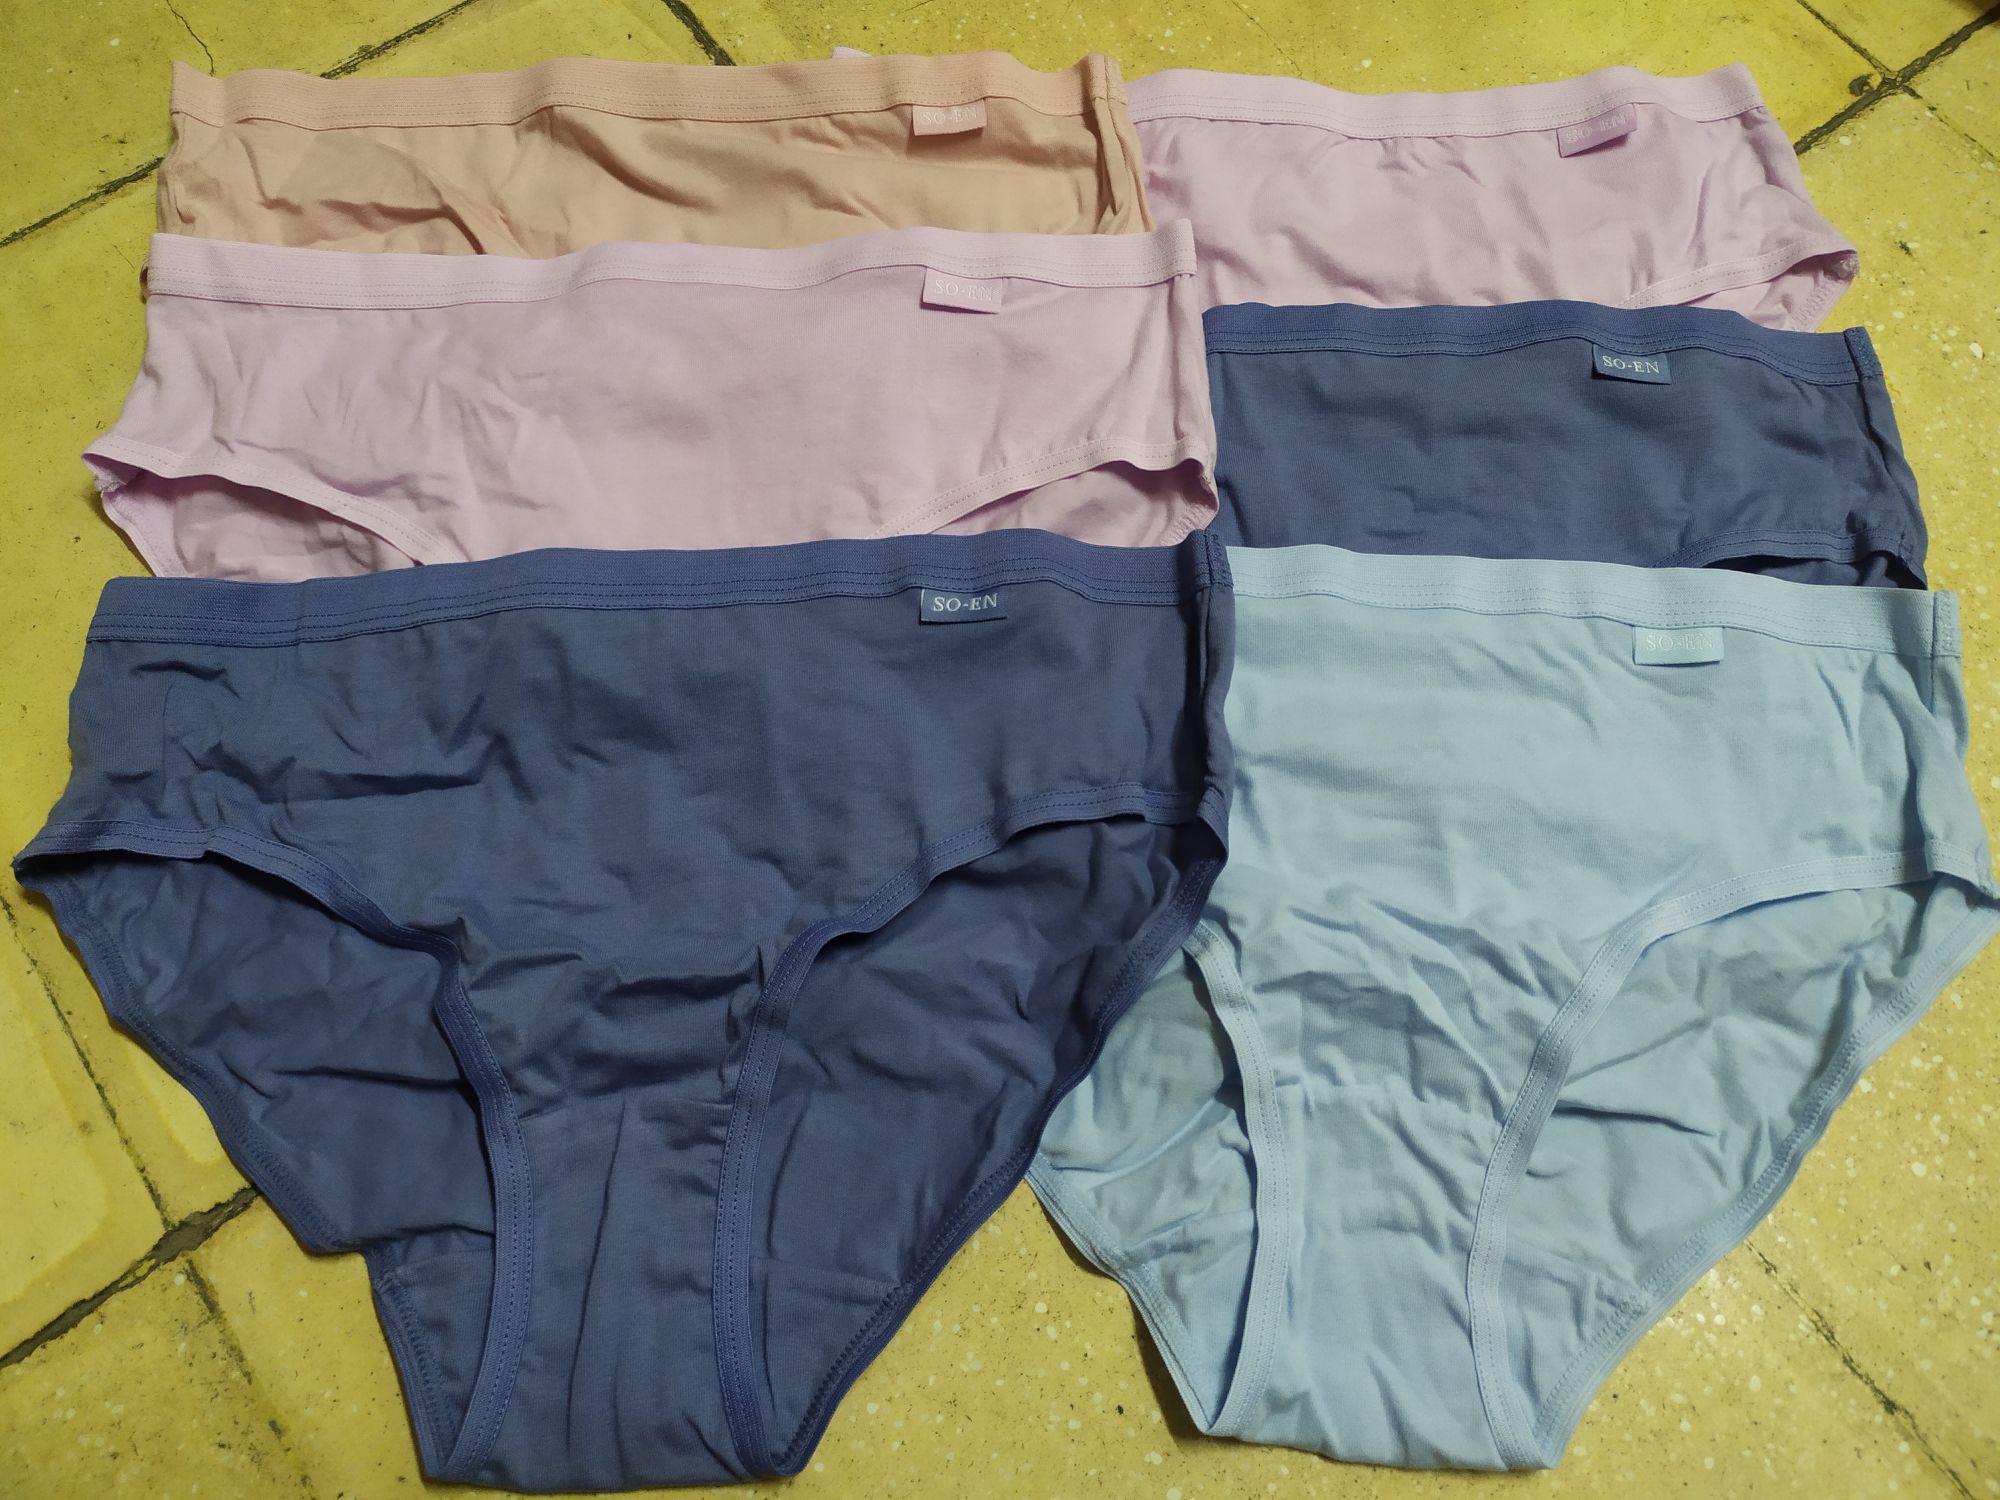 Soen ladies 6 in 1 bikini premium cotton spandex underwear comfy